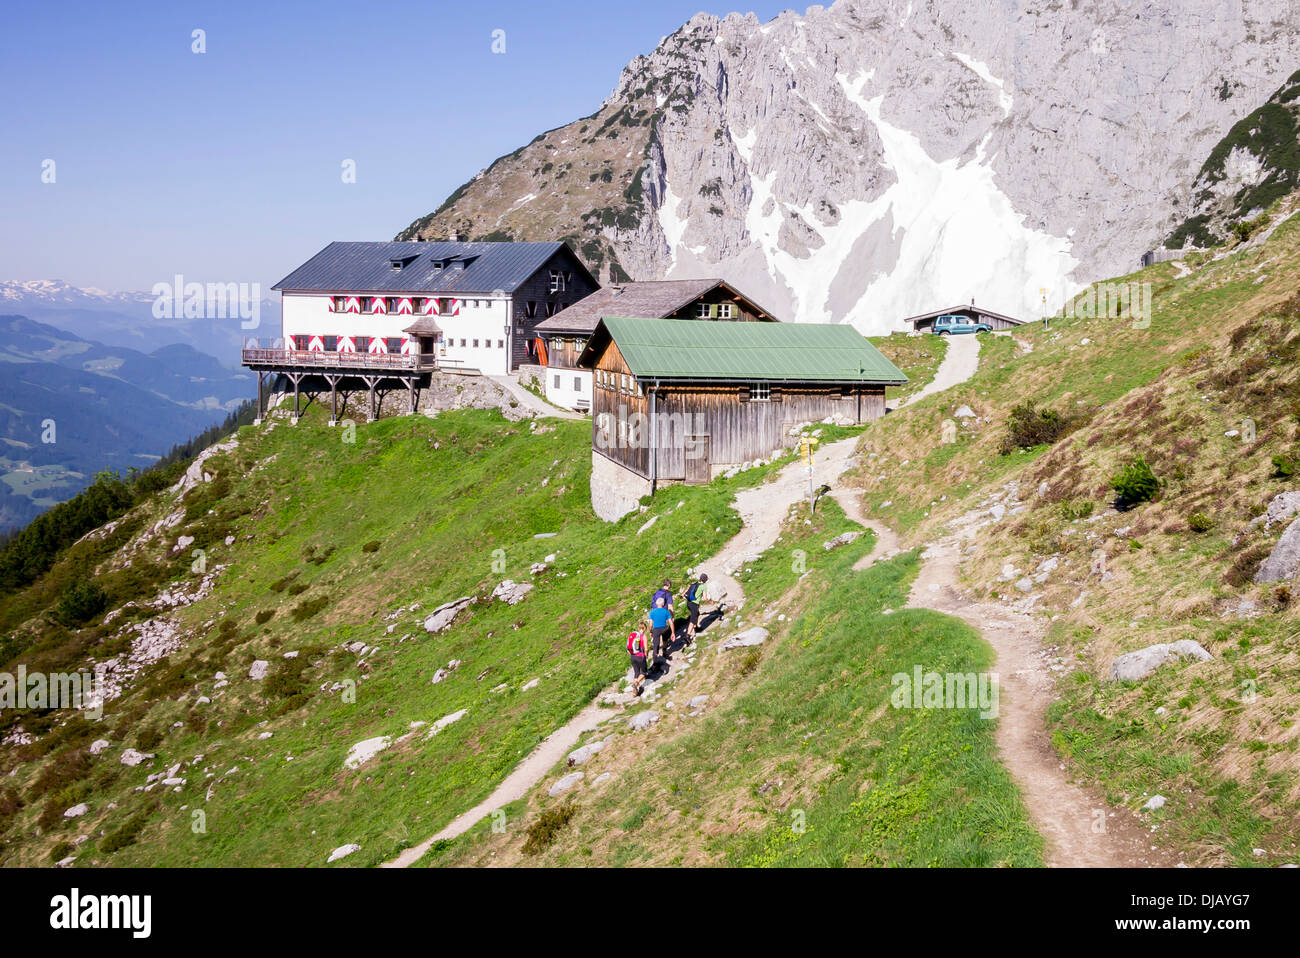 A lo largo de la cabaña de montaña Gruttenhuette Wilder-Kaiser-Steig Hiking Trail, en el Wilder Kaiser, montañas Kaisergebirge Foto de stock